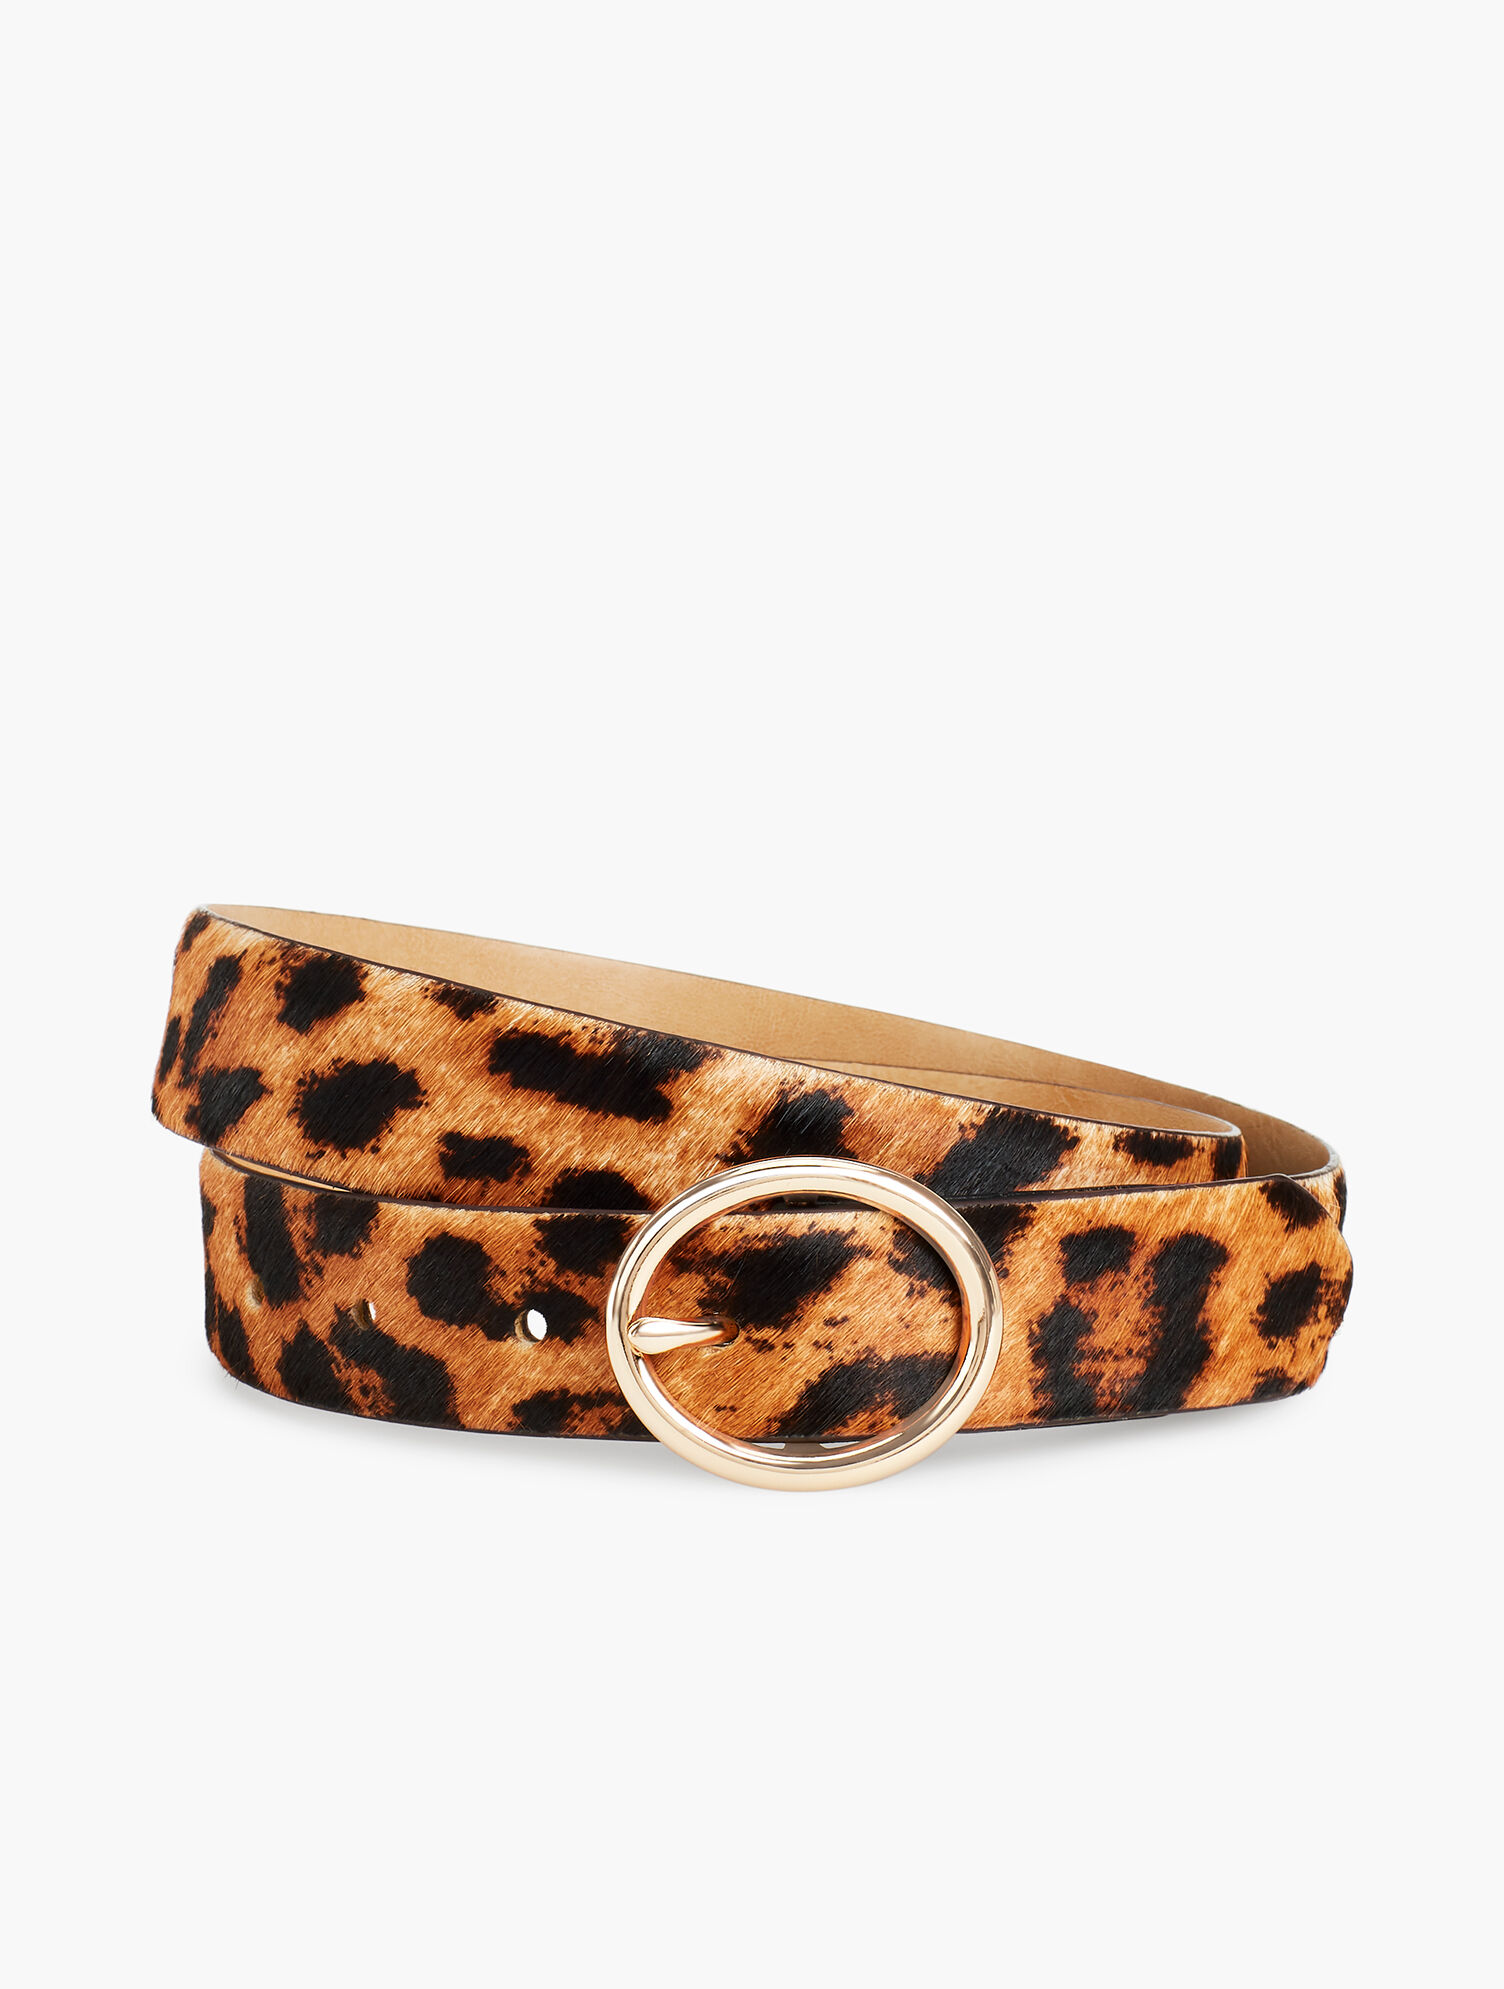 Plus Size Calf Hair Belt - Leopard | Talbots